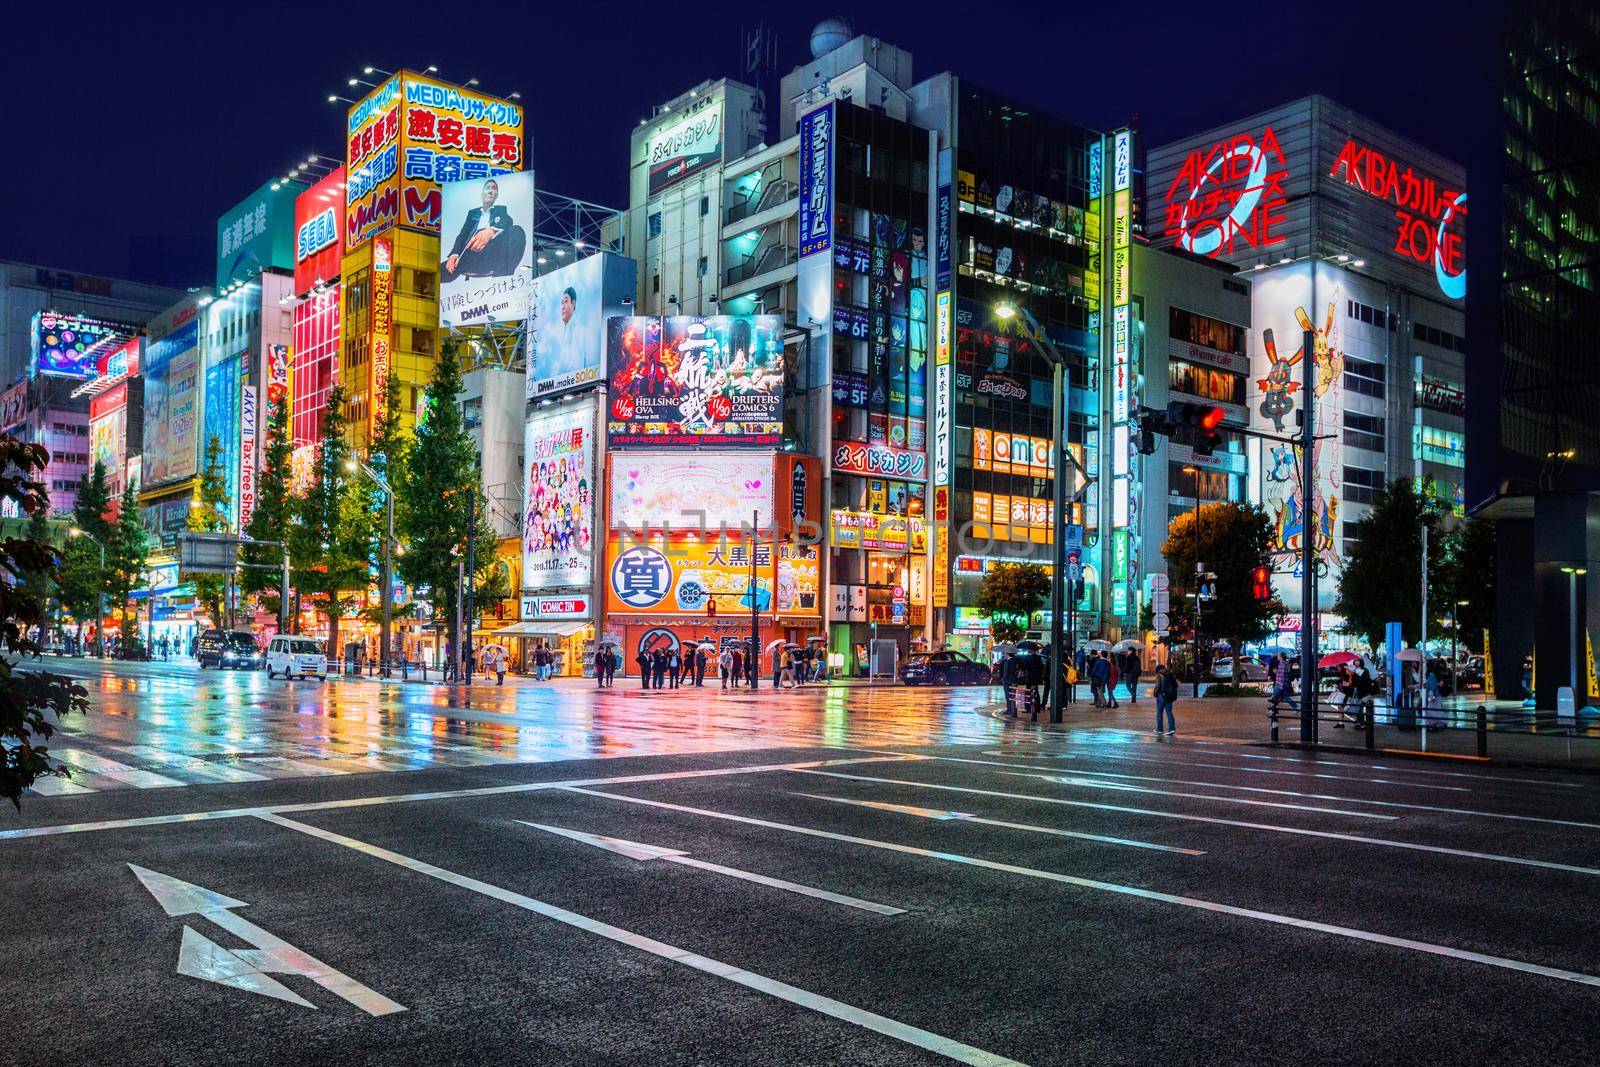 Tokyo, Japan - November 19, 2018: Neon lights and billboard advertisements on buildings at Akihabara at rainy night. Akihabara is a shopping district for video games, anime, manga, and computer goods.